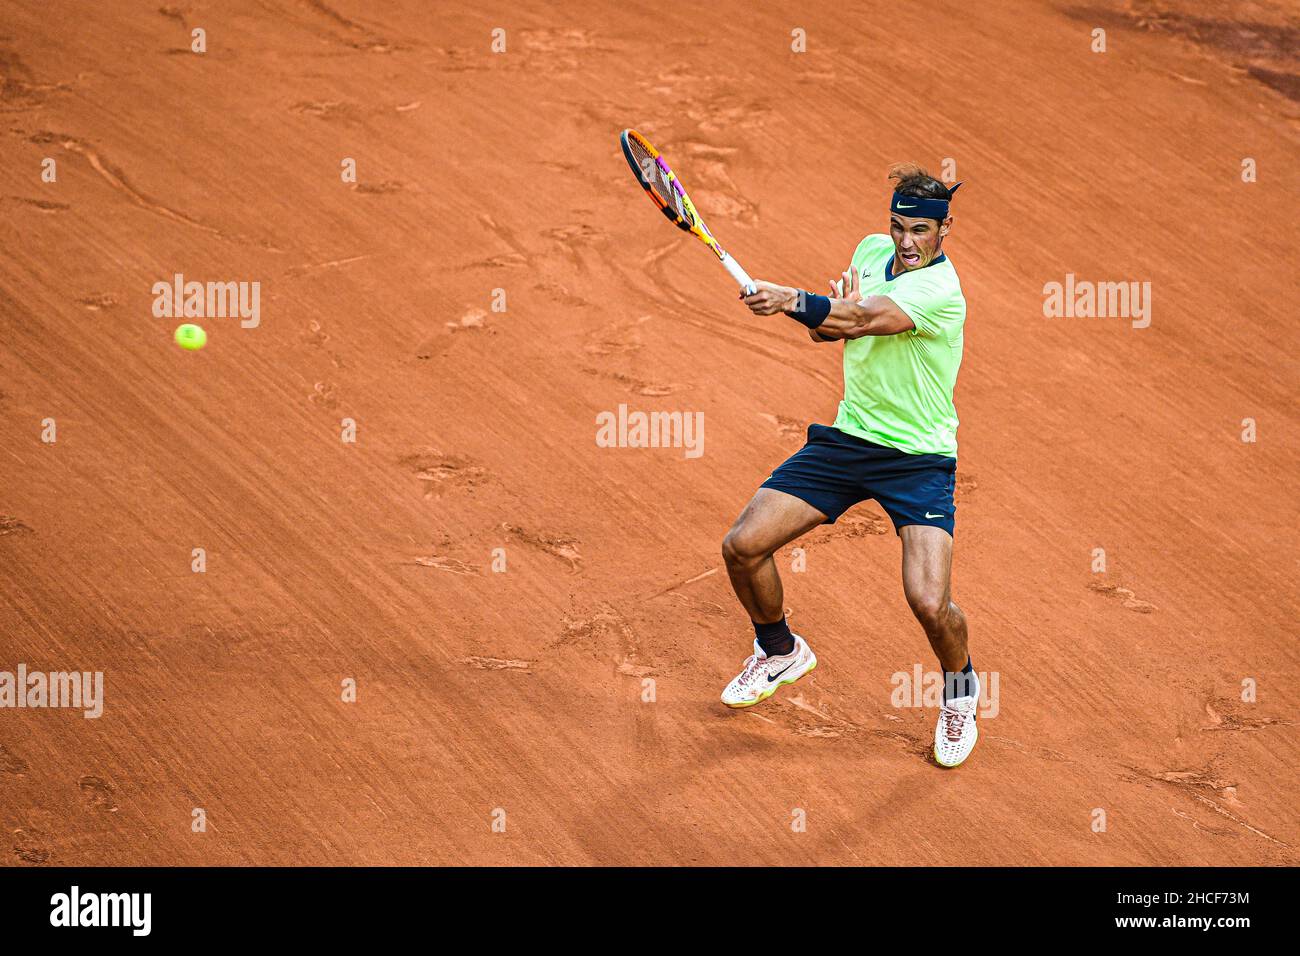 Rafael Nadal during the semi-final of the Roland-Garros 2021, Grand Slam tennis tournament on June 11, 2021. Stock Photo